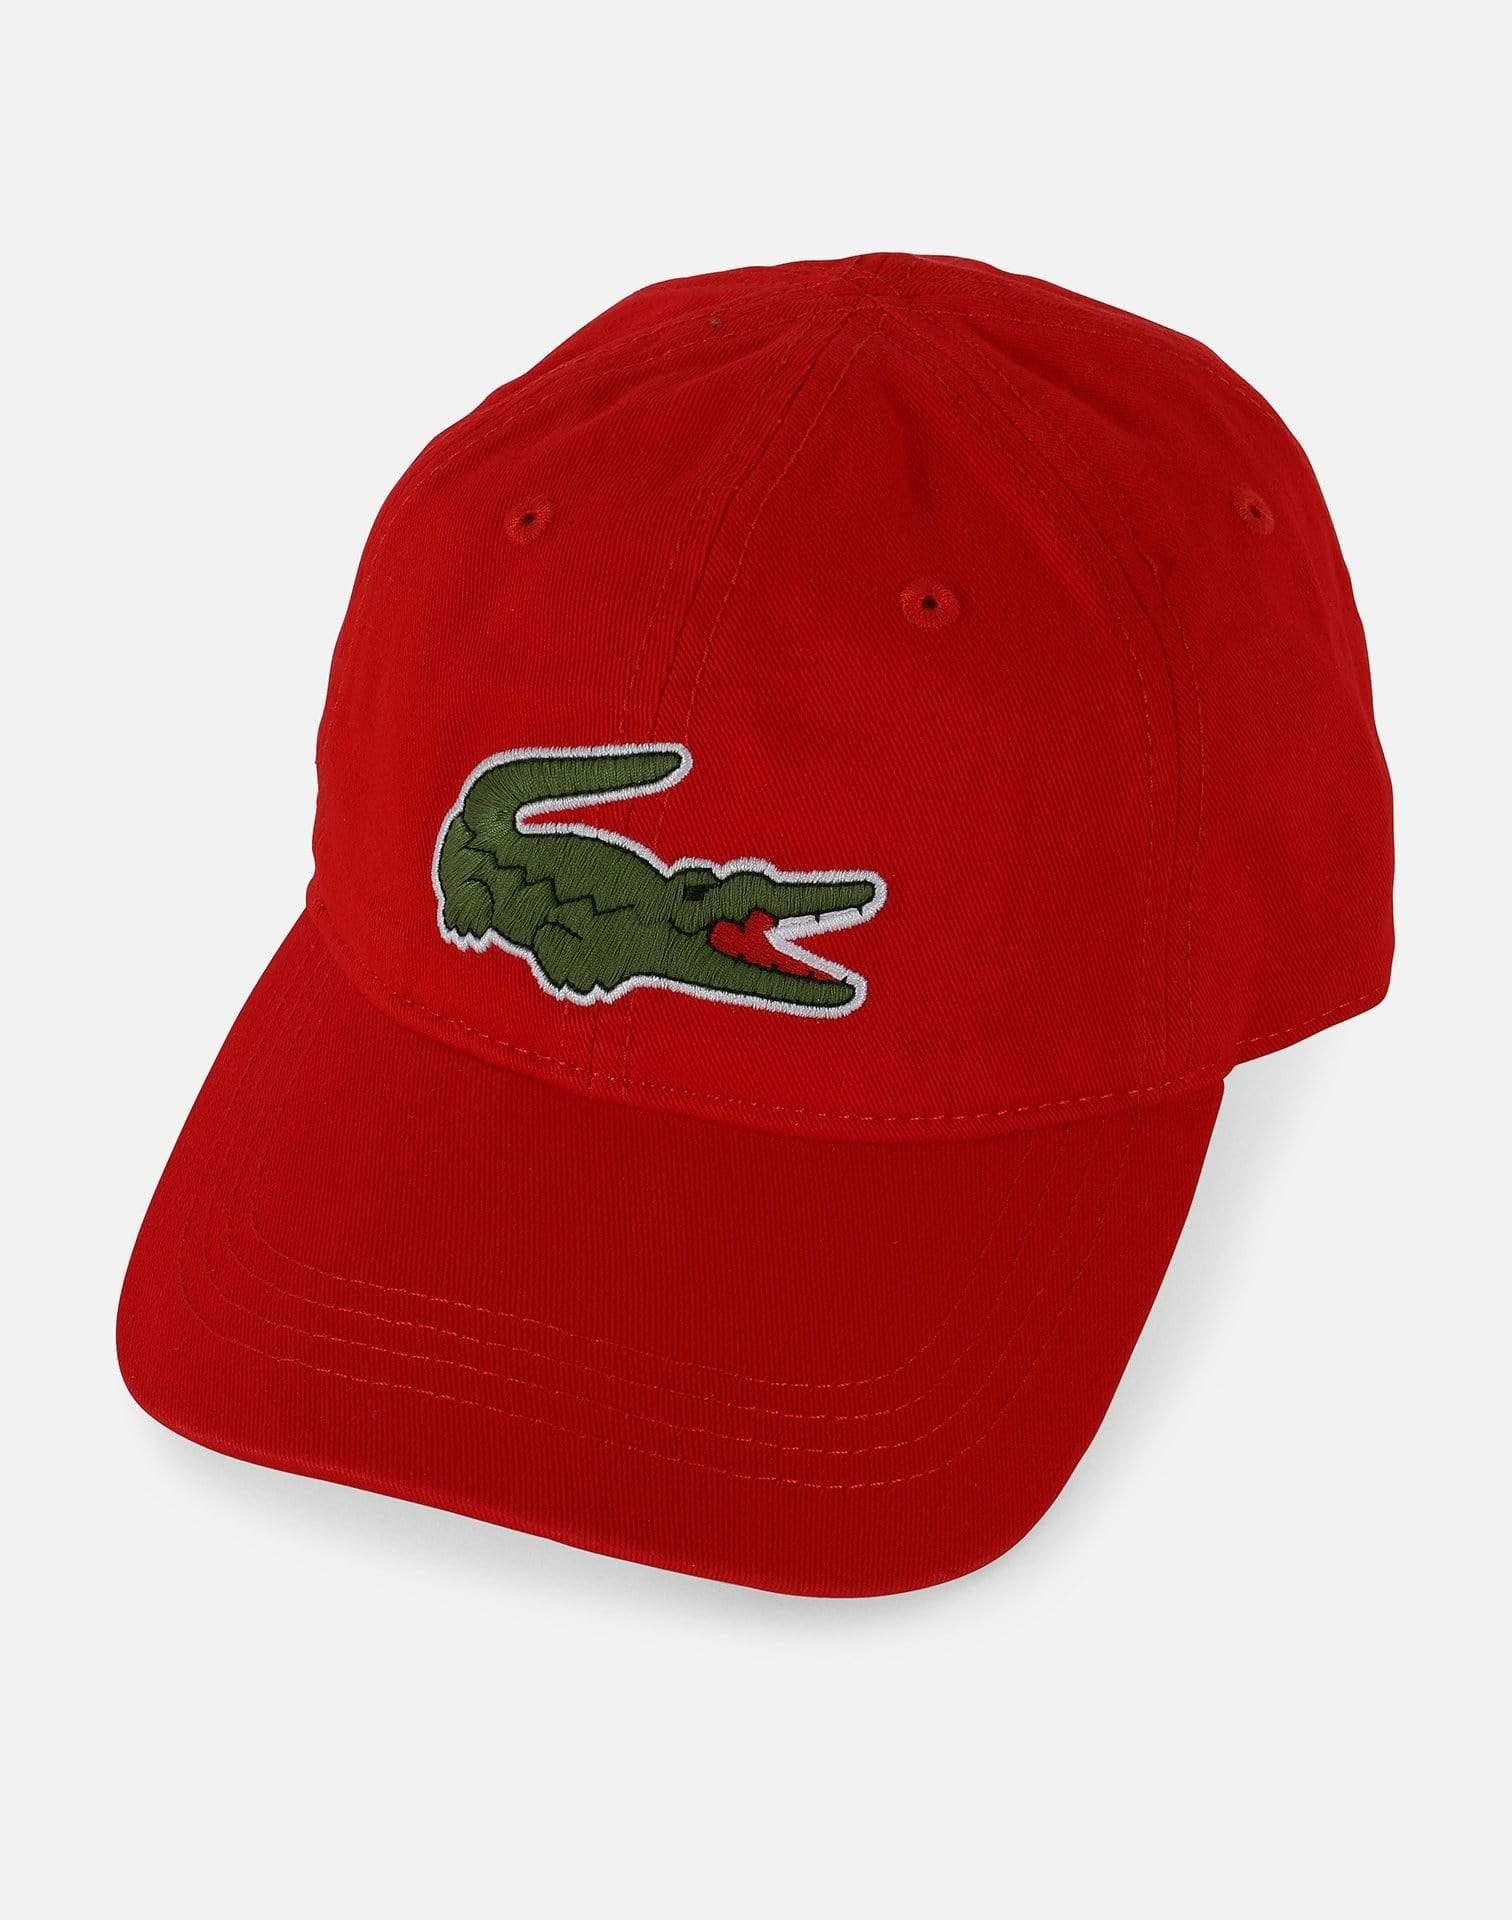 Lacoste Cotton Big Croc Gabardine Dad Cap in Red for Men - Save 28% - Lyst